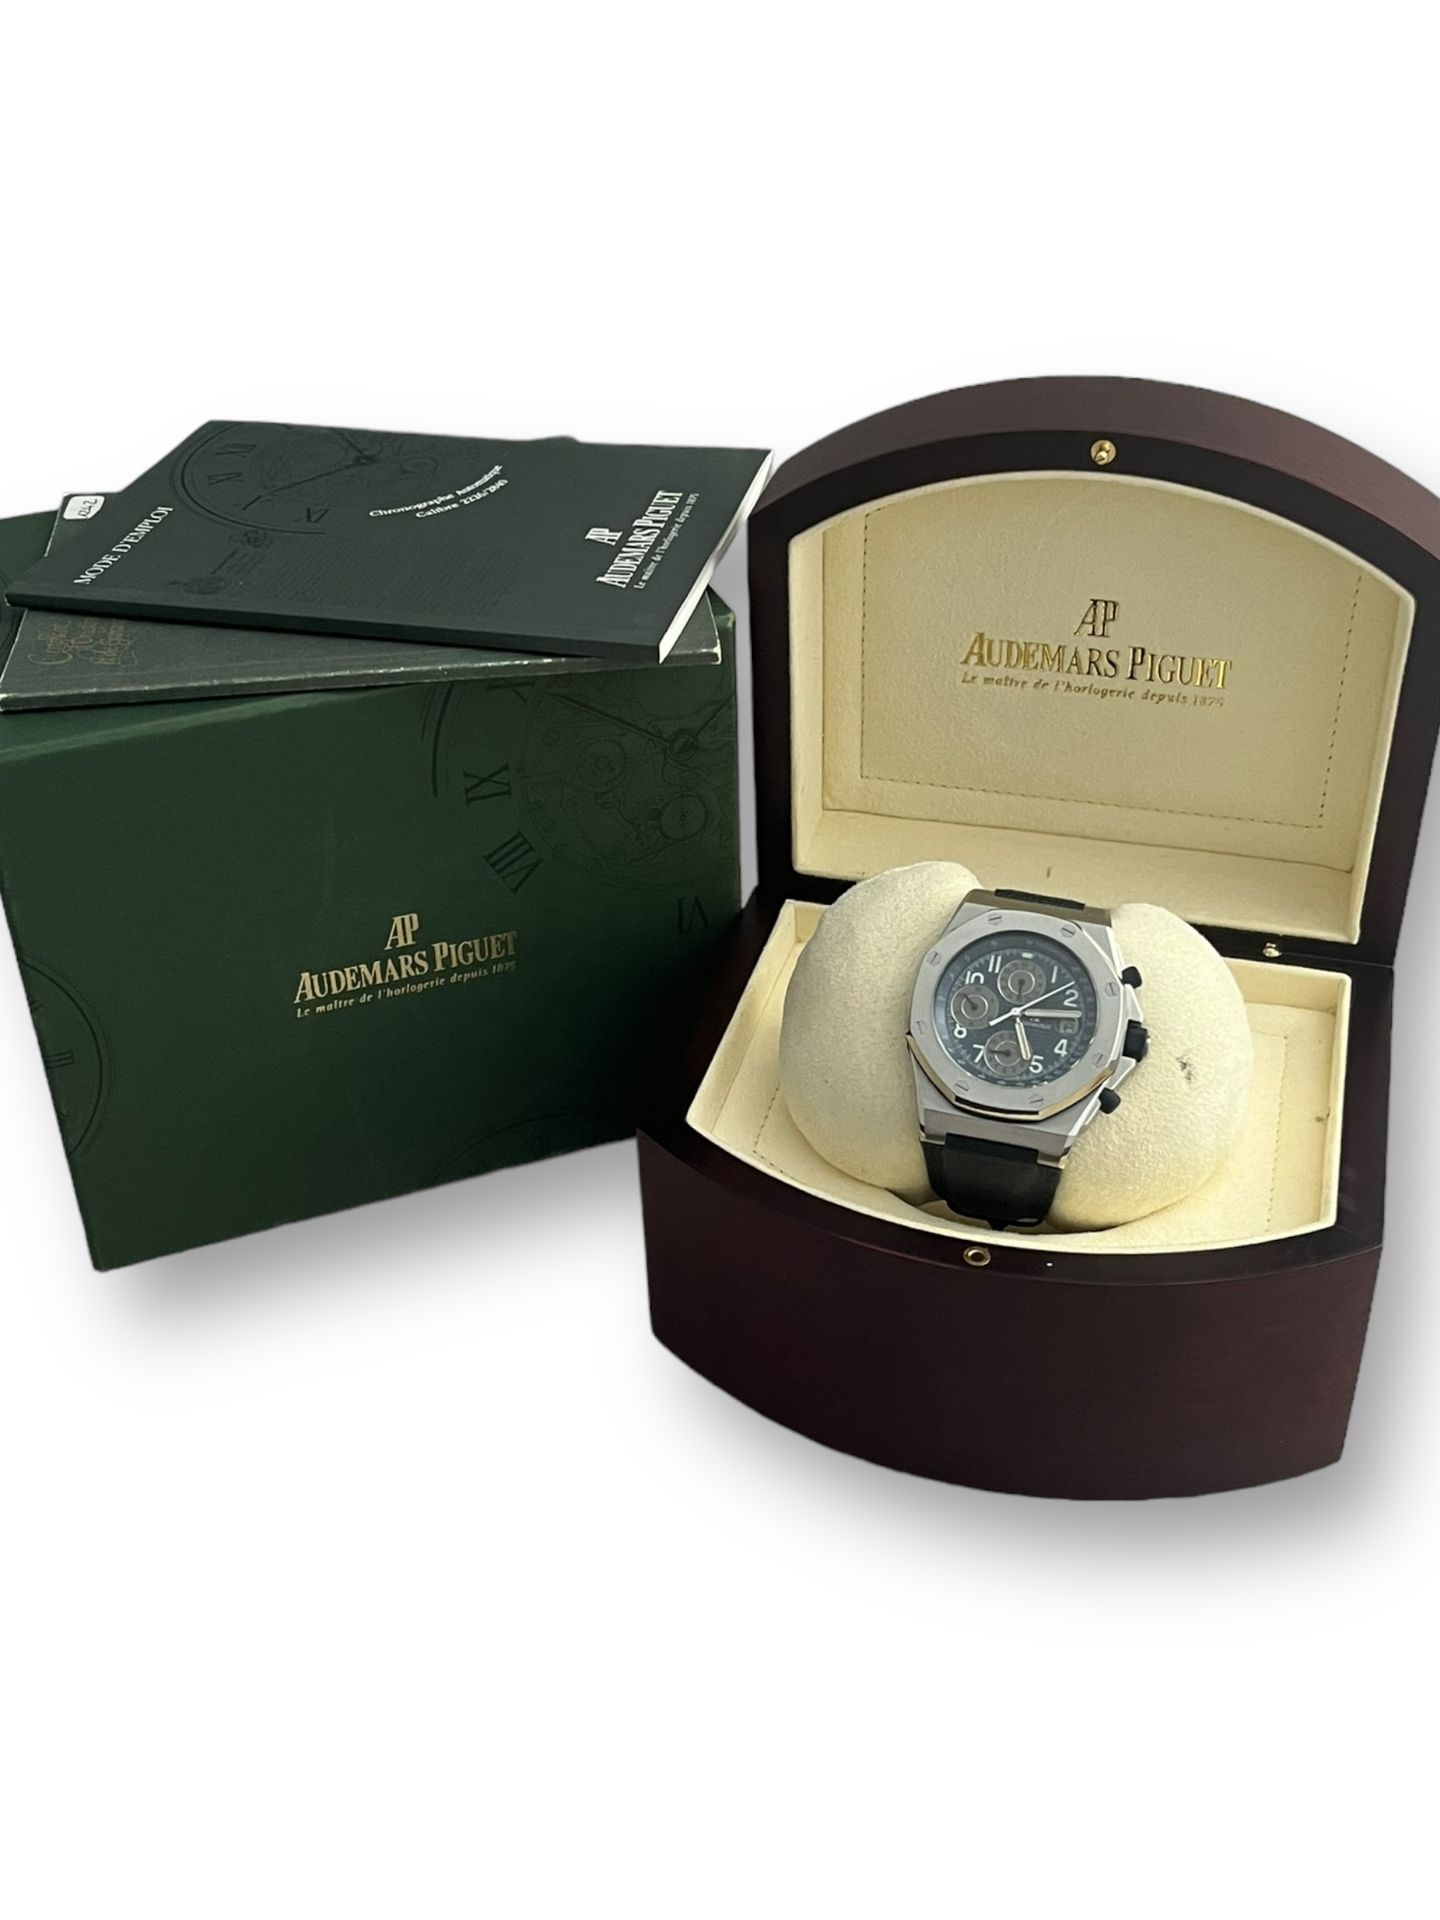 Null AUDEMARS PIGUET
Royal Oak Offshore model
Chronograph wristwatch. Octagonal &hellip;